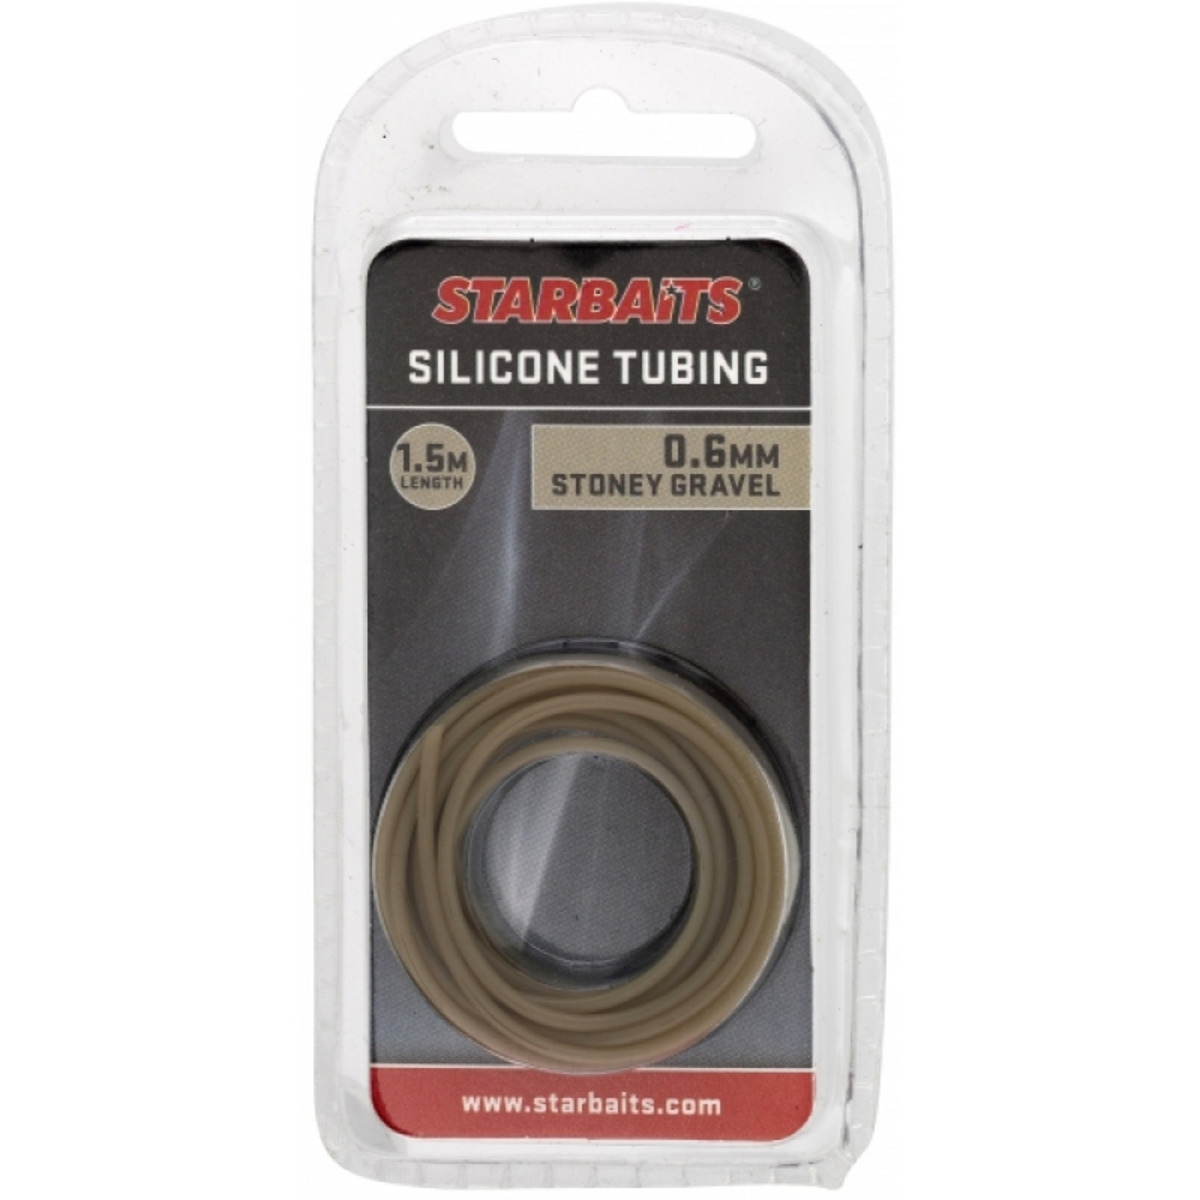 Starbaits Silicone Tubing 0.6mm - STONEY GRAVEL